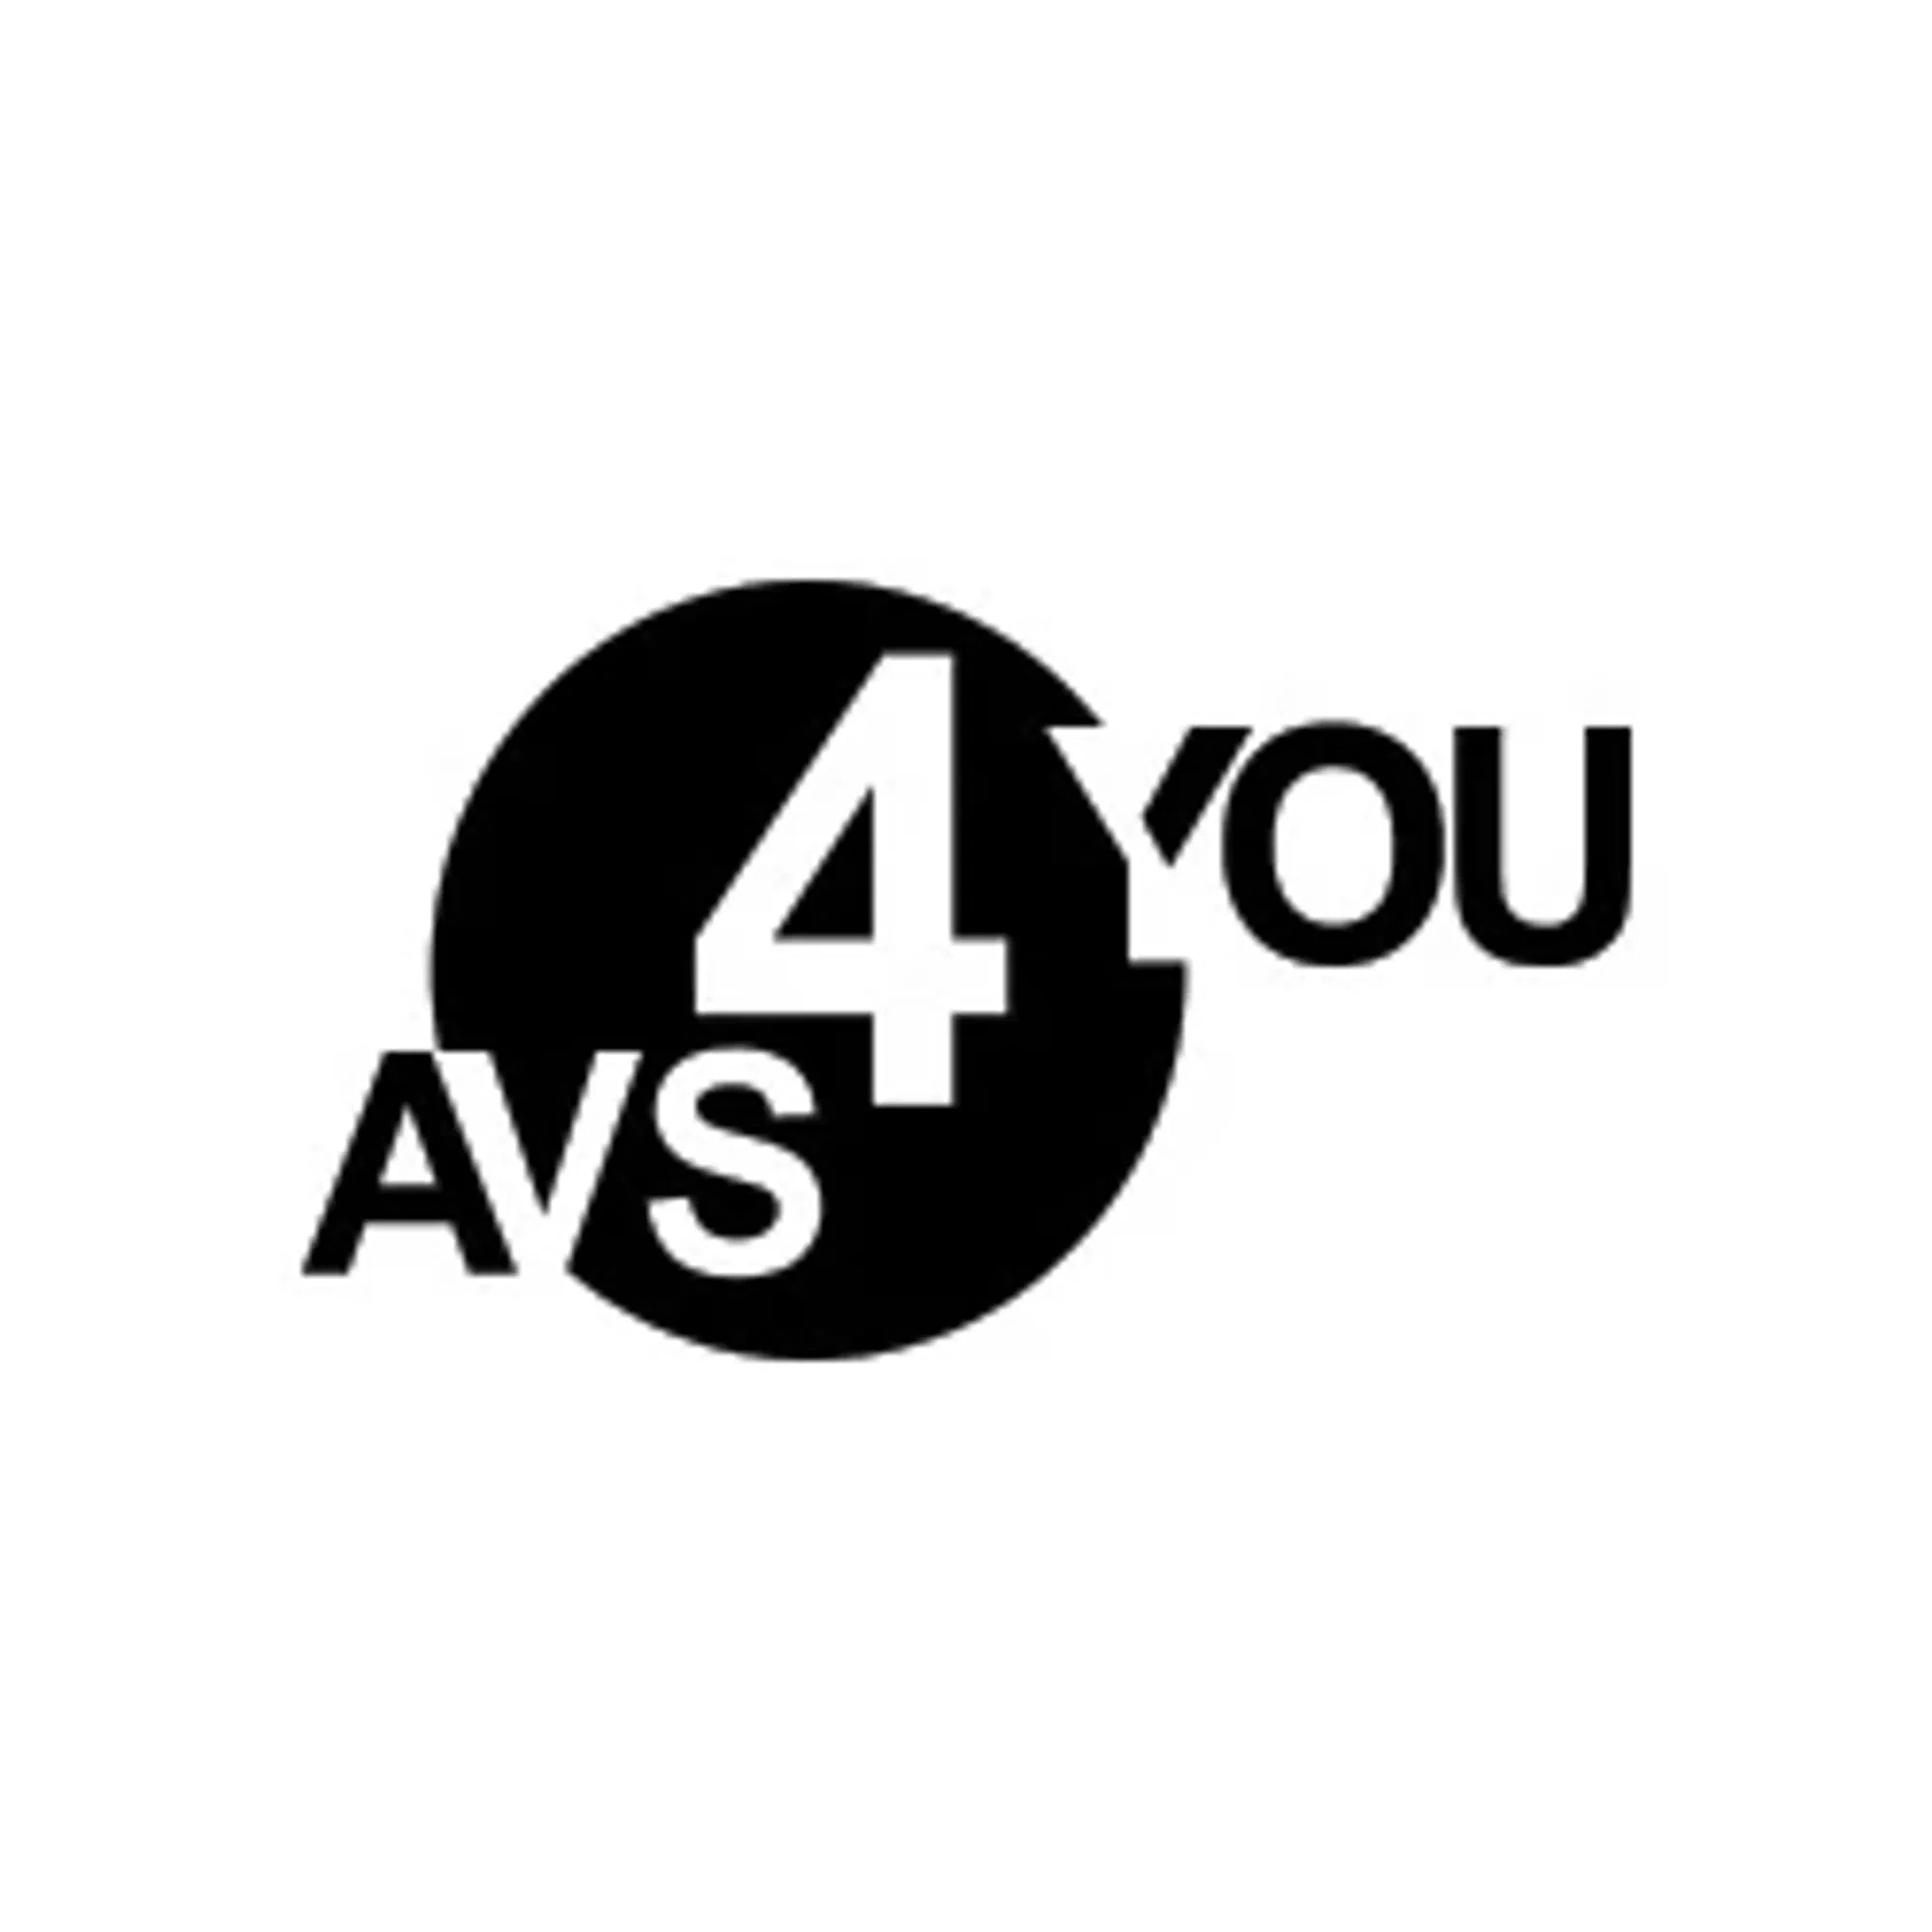 avs4you activation code free blogspot